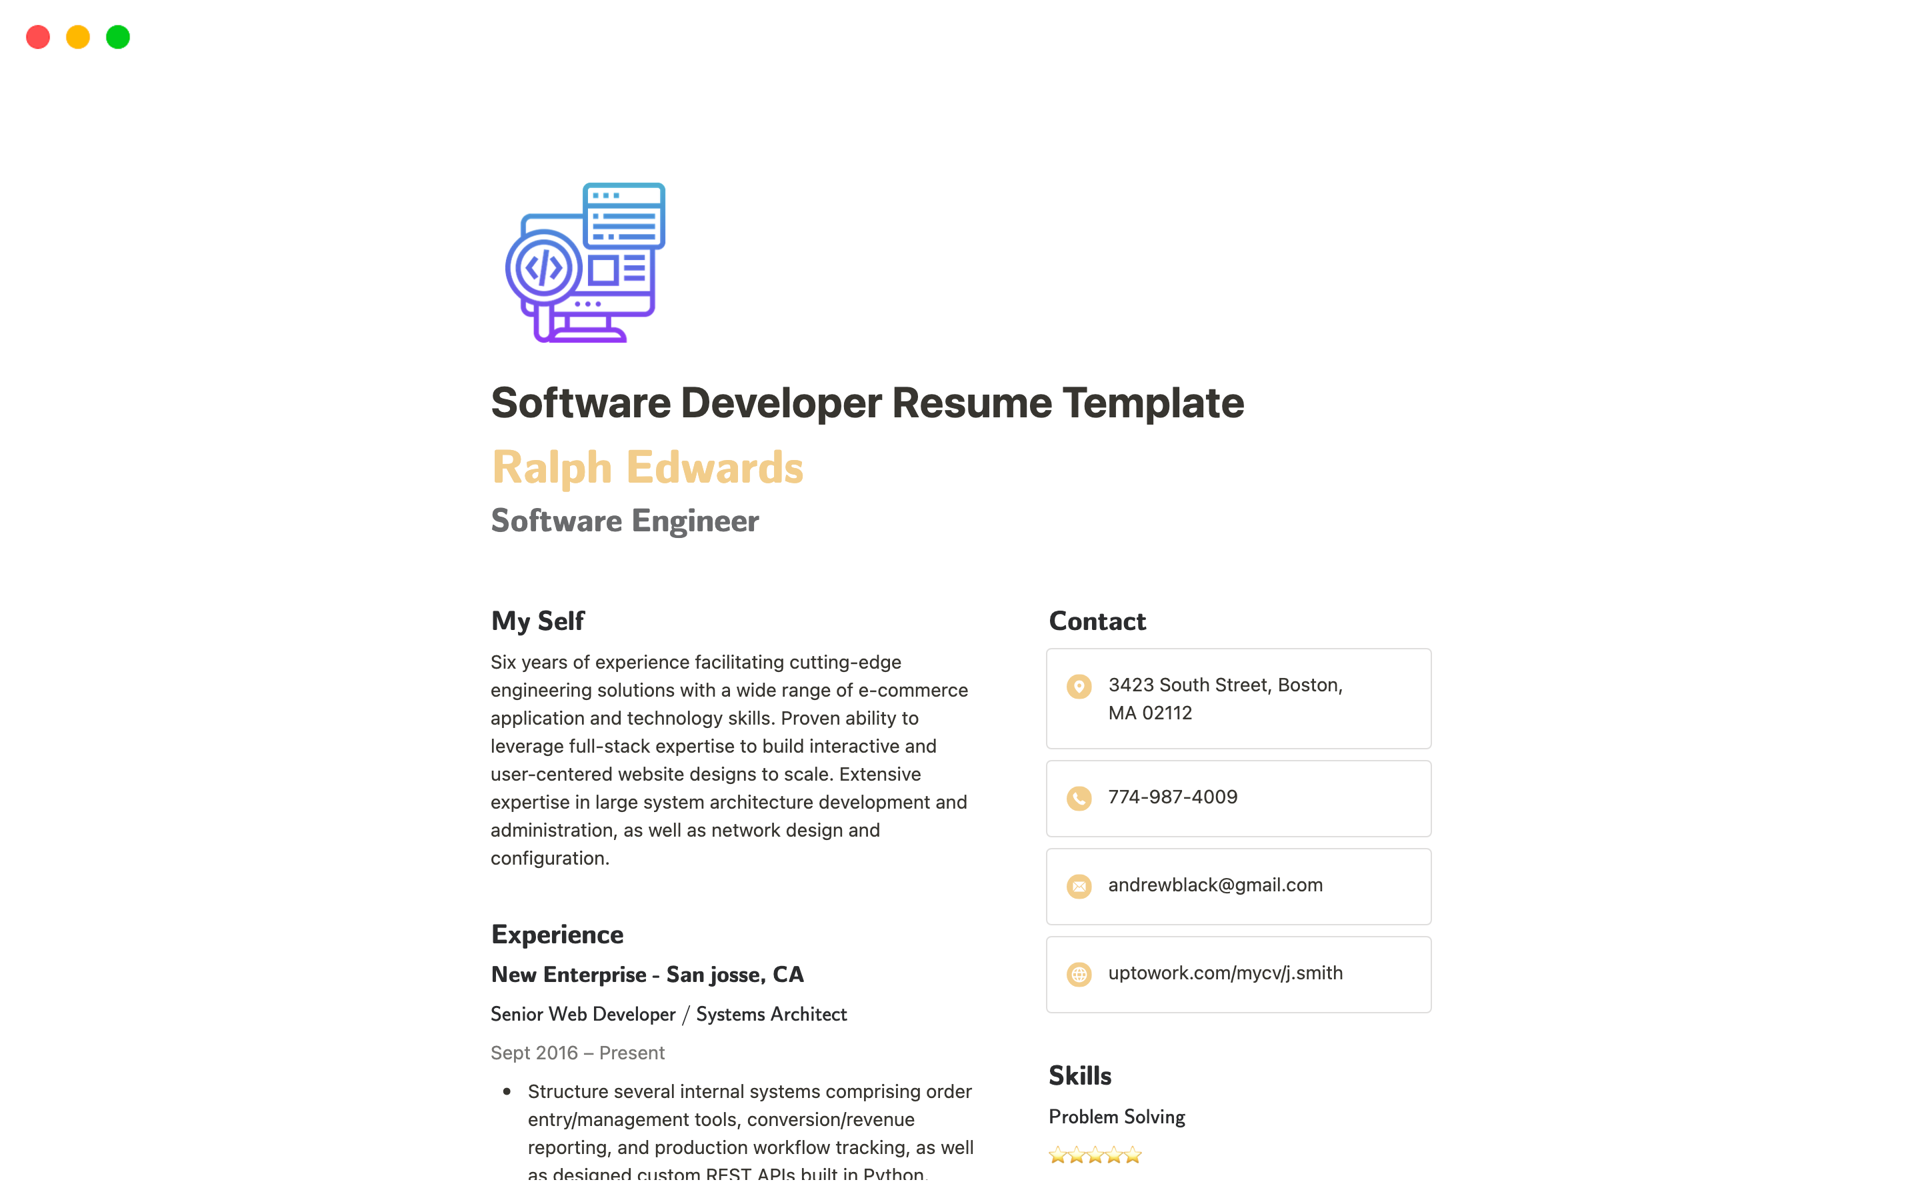 Aperçu du modèle de Software Developer Resume